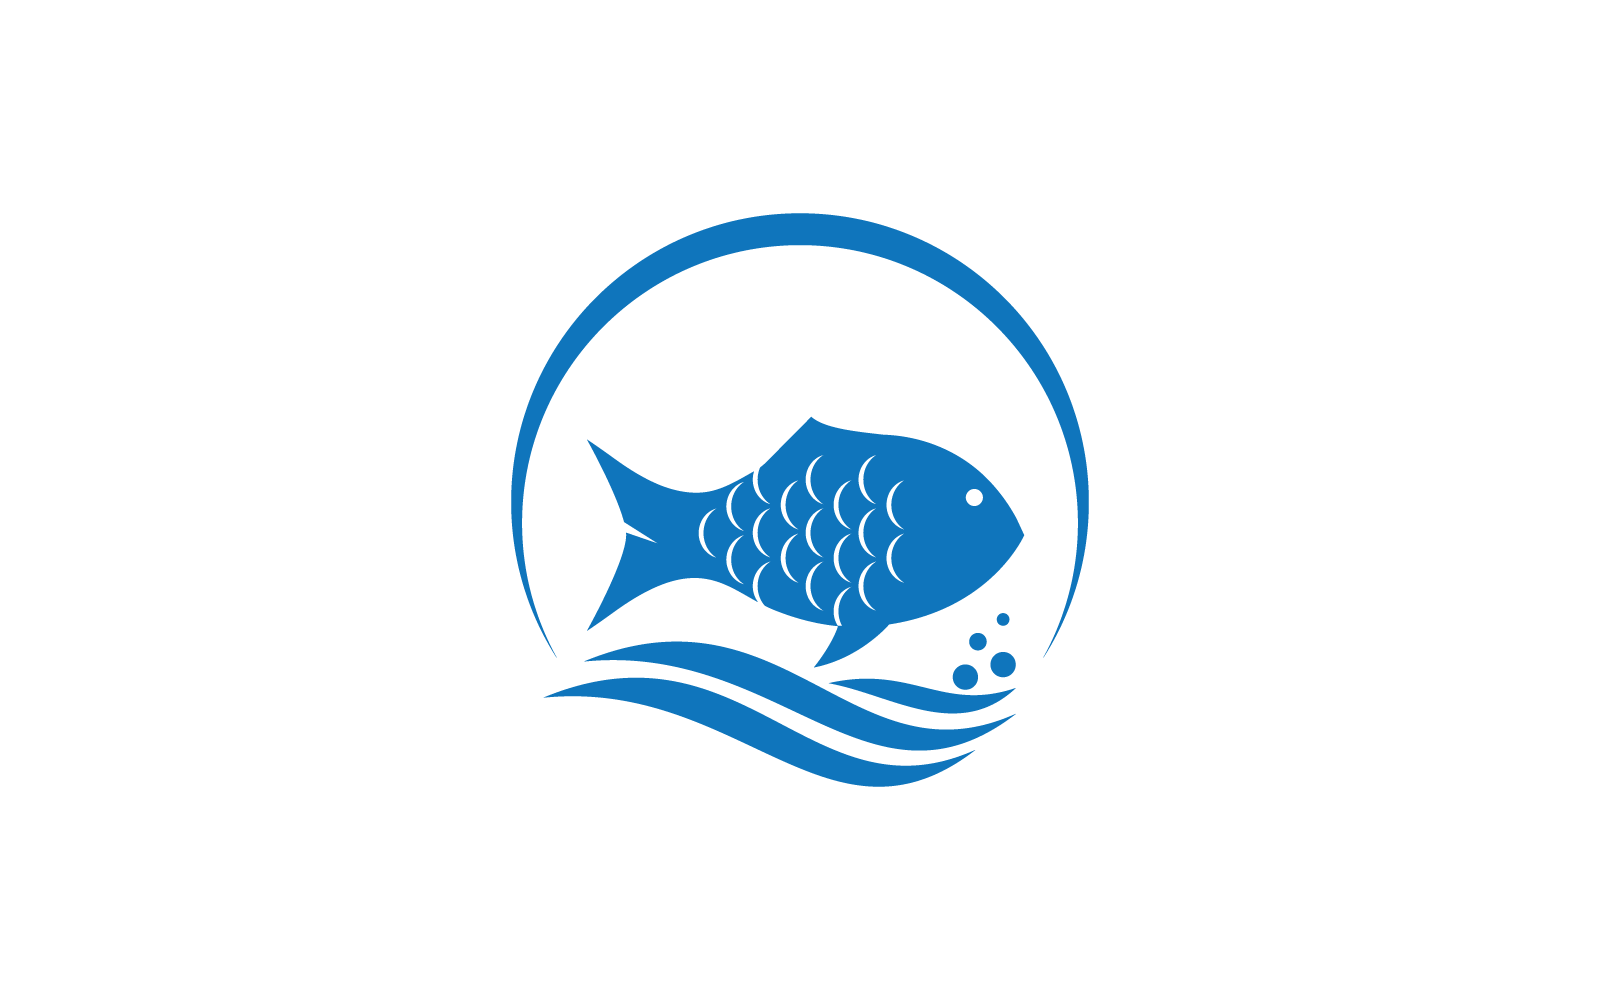 Ryba ilustracja logo Płaska konstrukcja